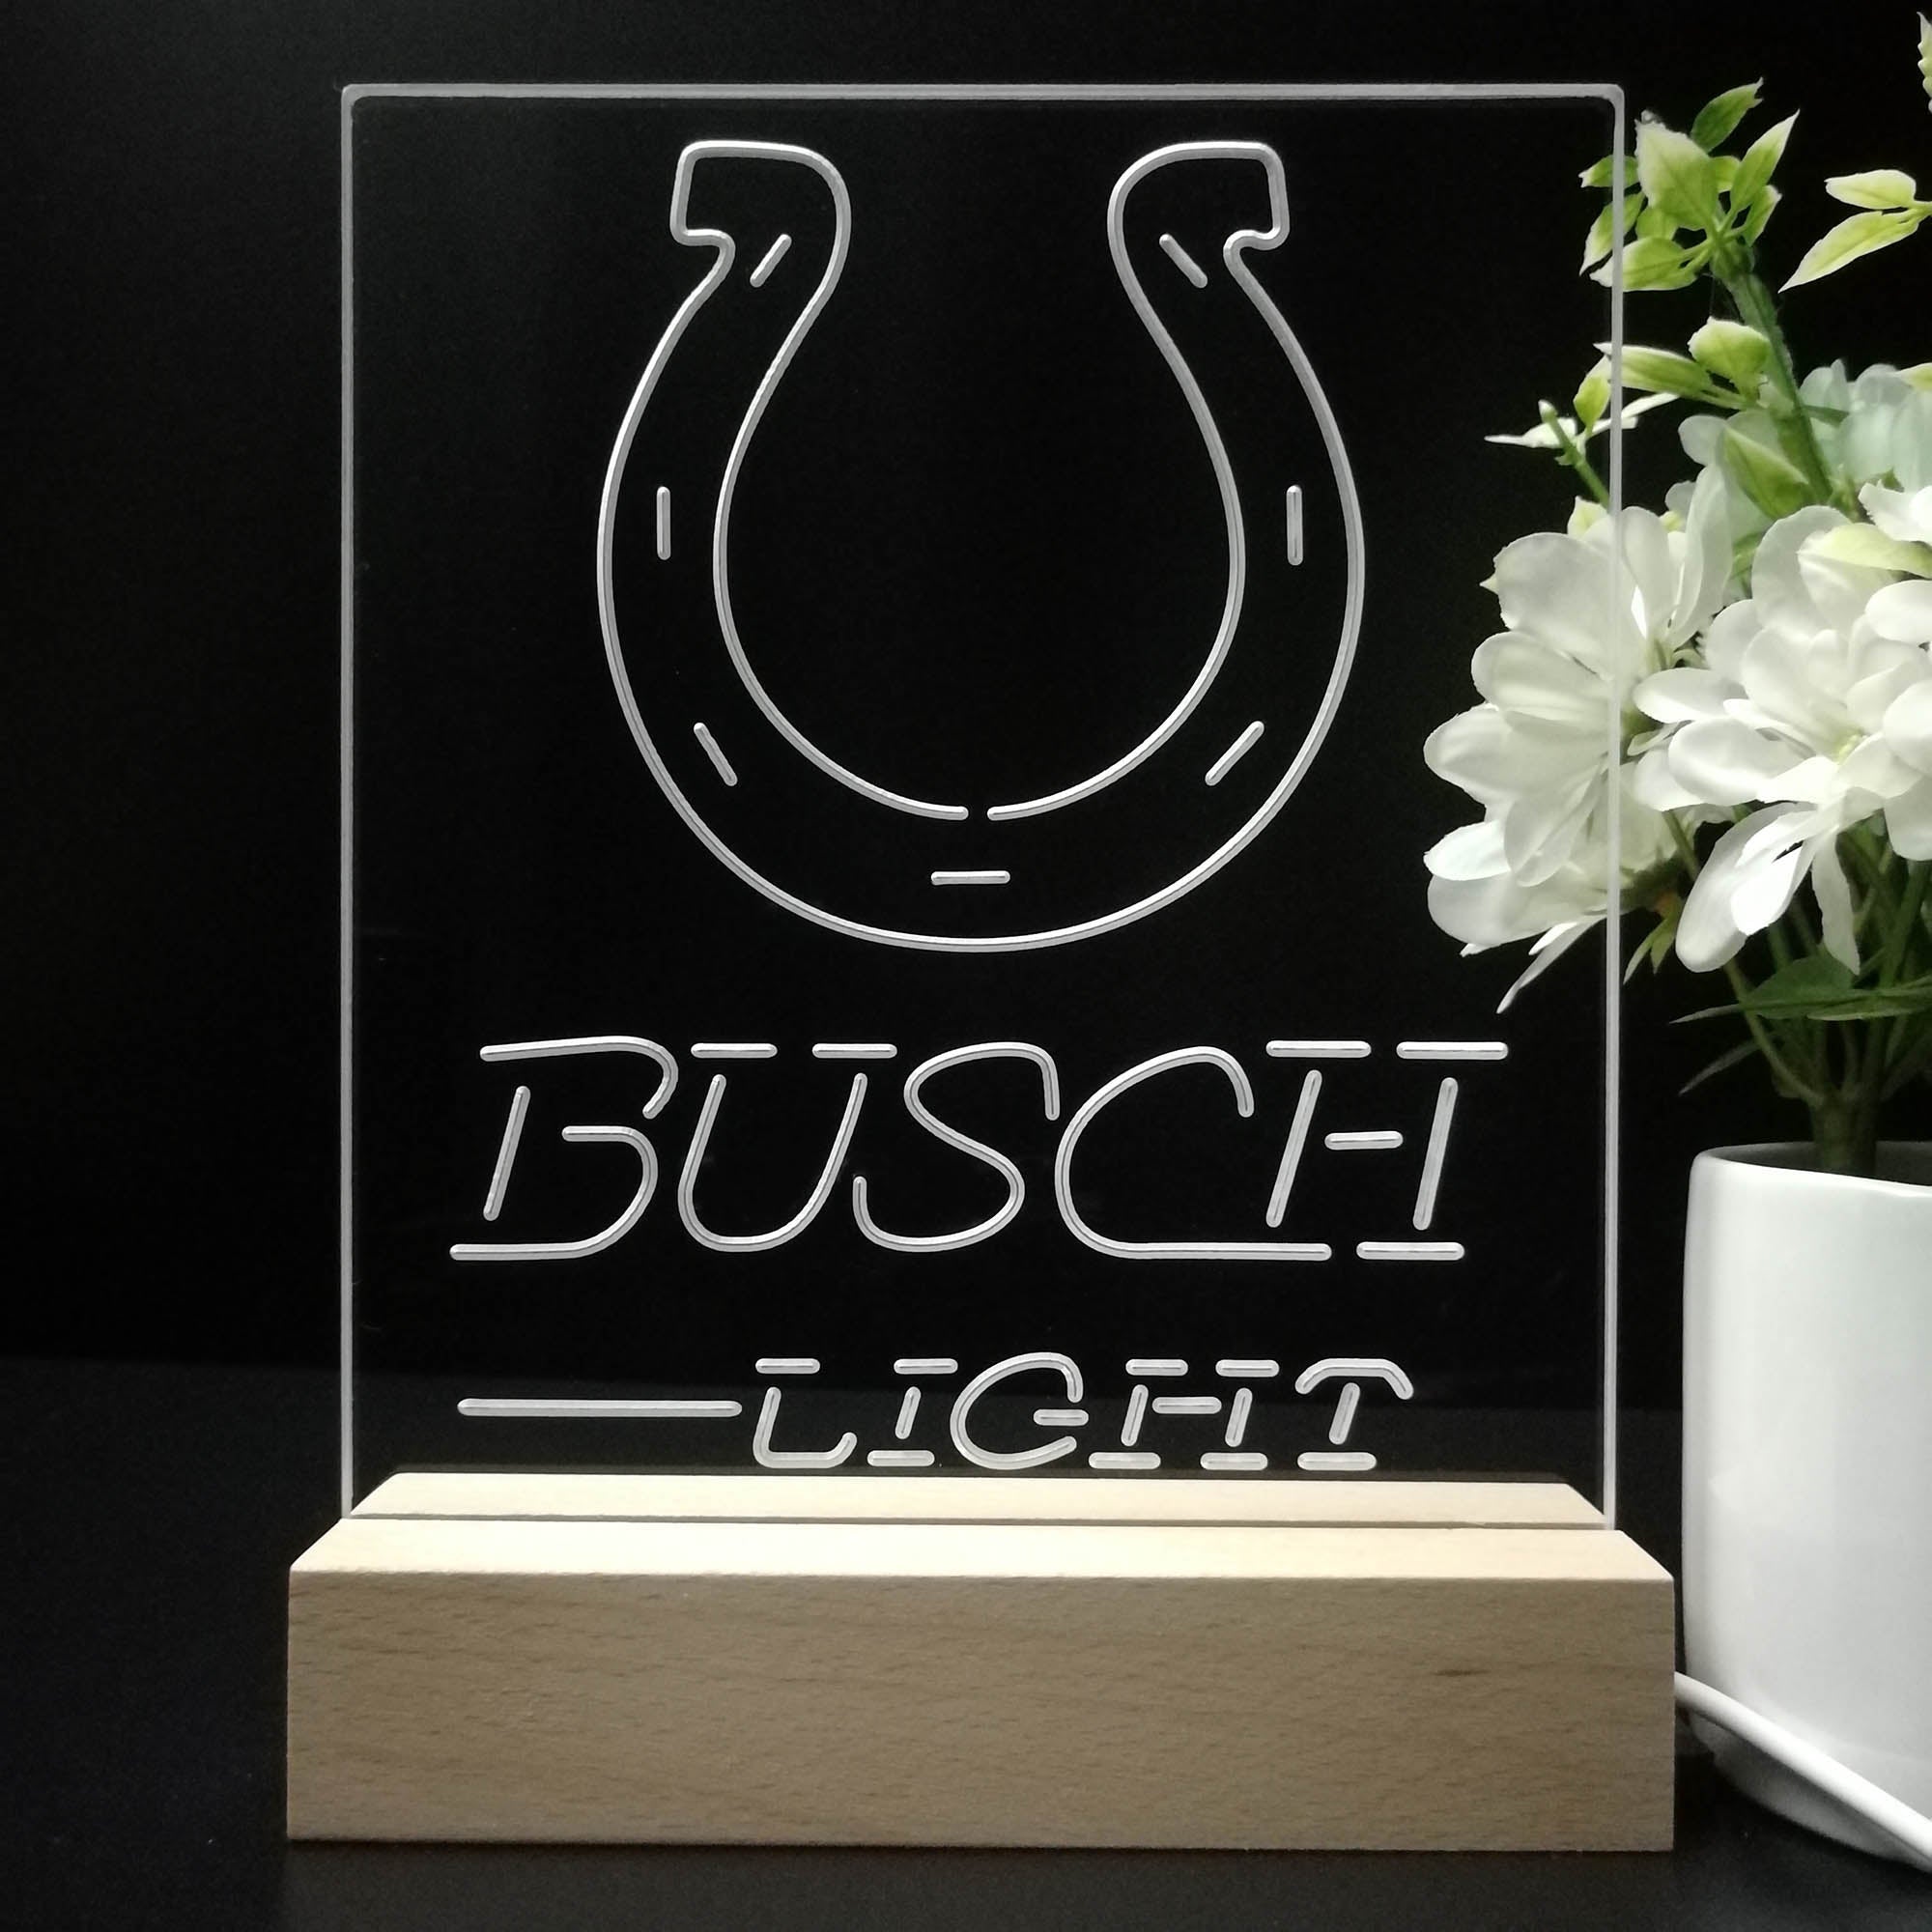 Indianapolis Colts Busch Light Neon Sign Pub Bar Lamp